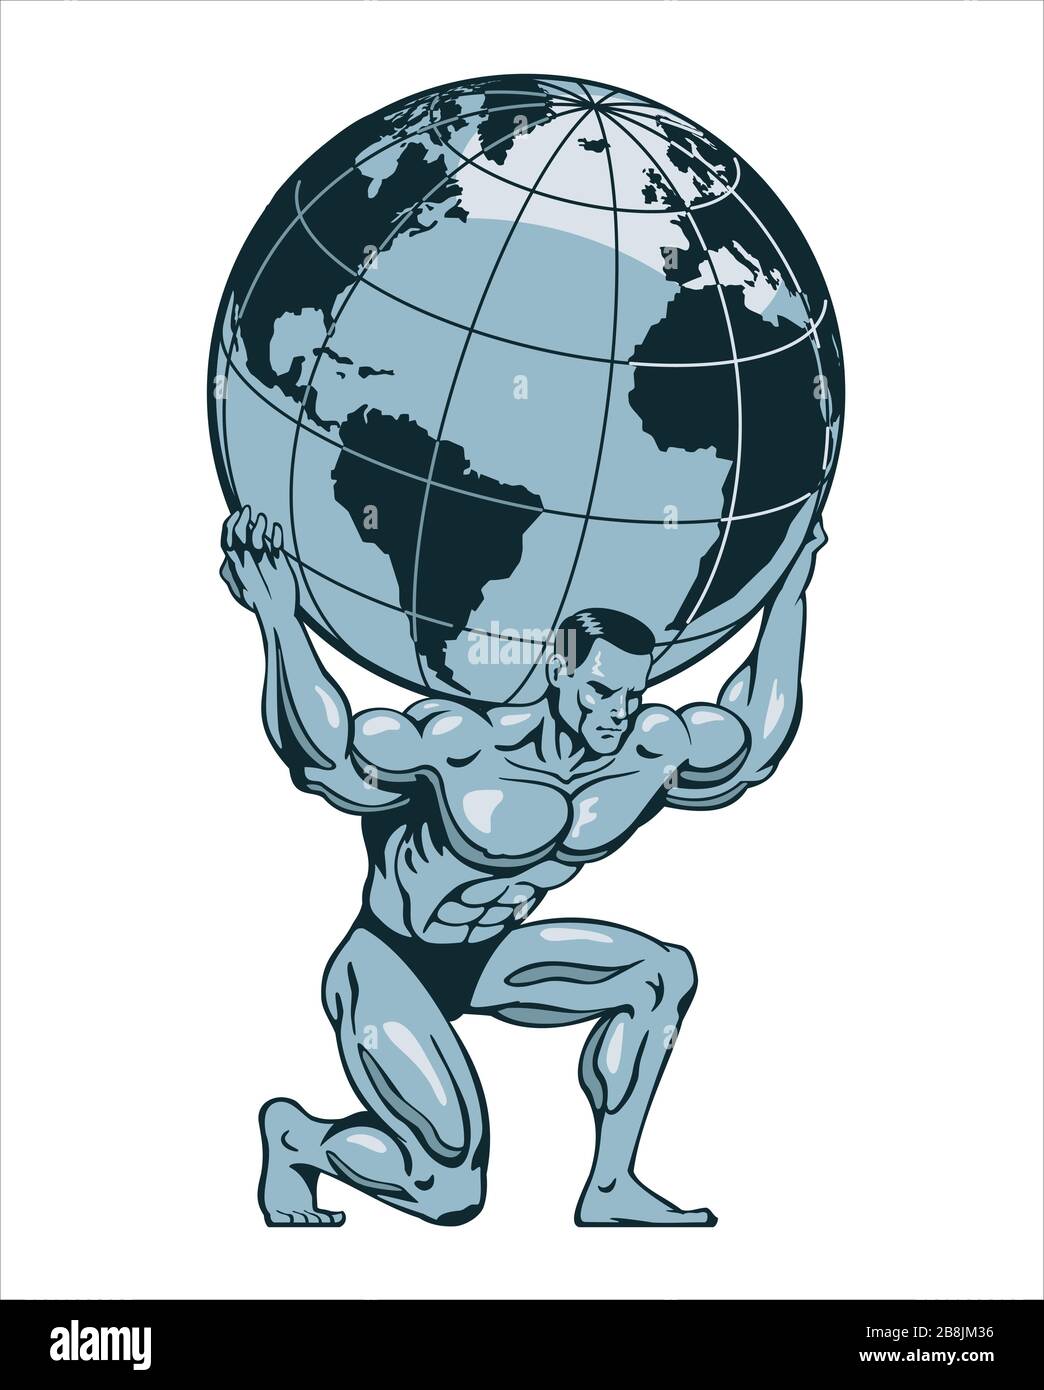 Atlas or titan kneeling carrying lifting globe world earth on his back. Bodybuilder. Stylized vector illustration. Stock Vector